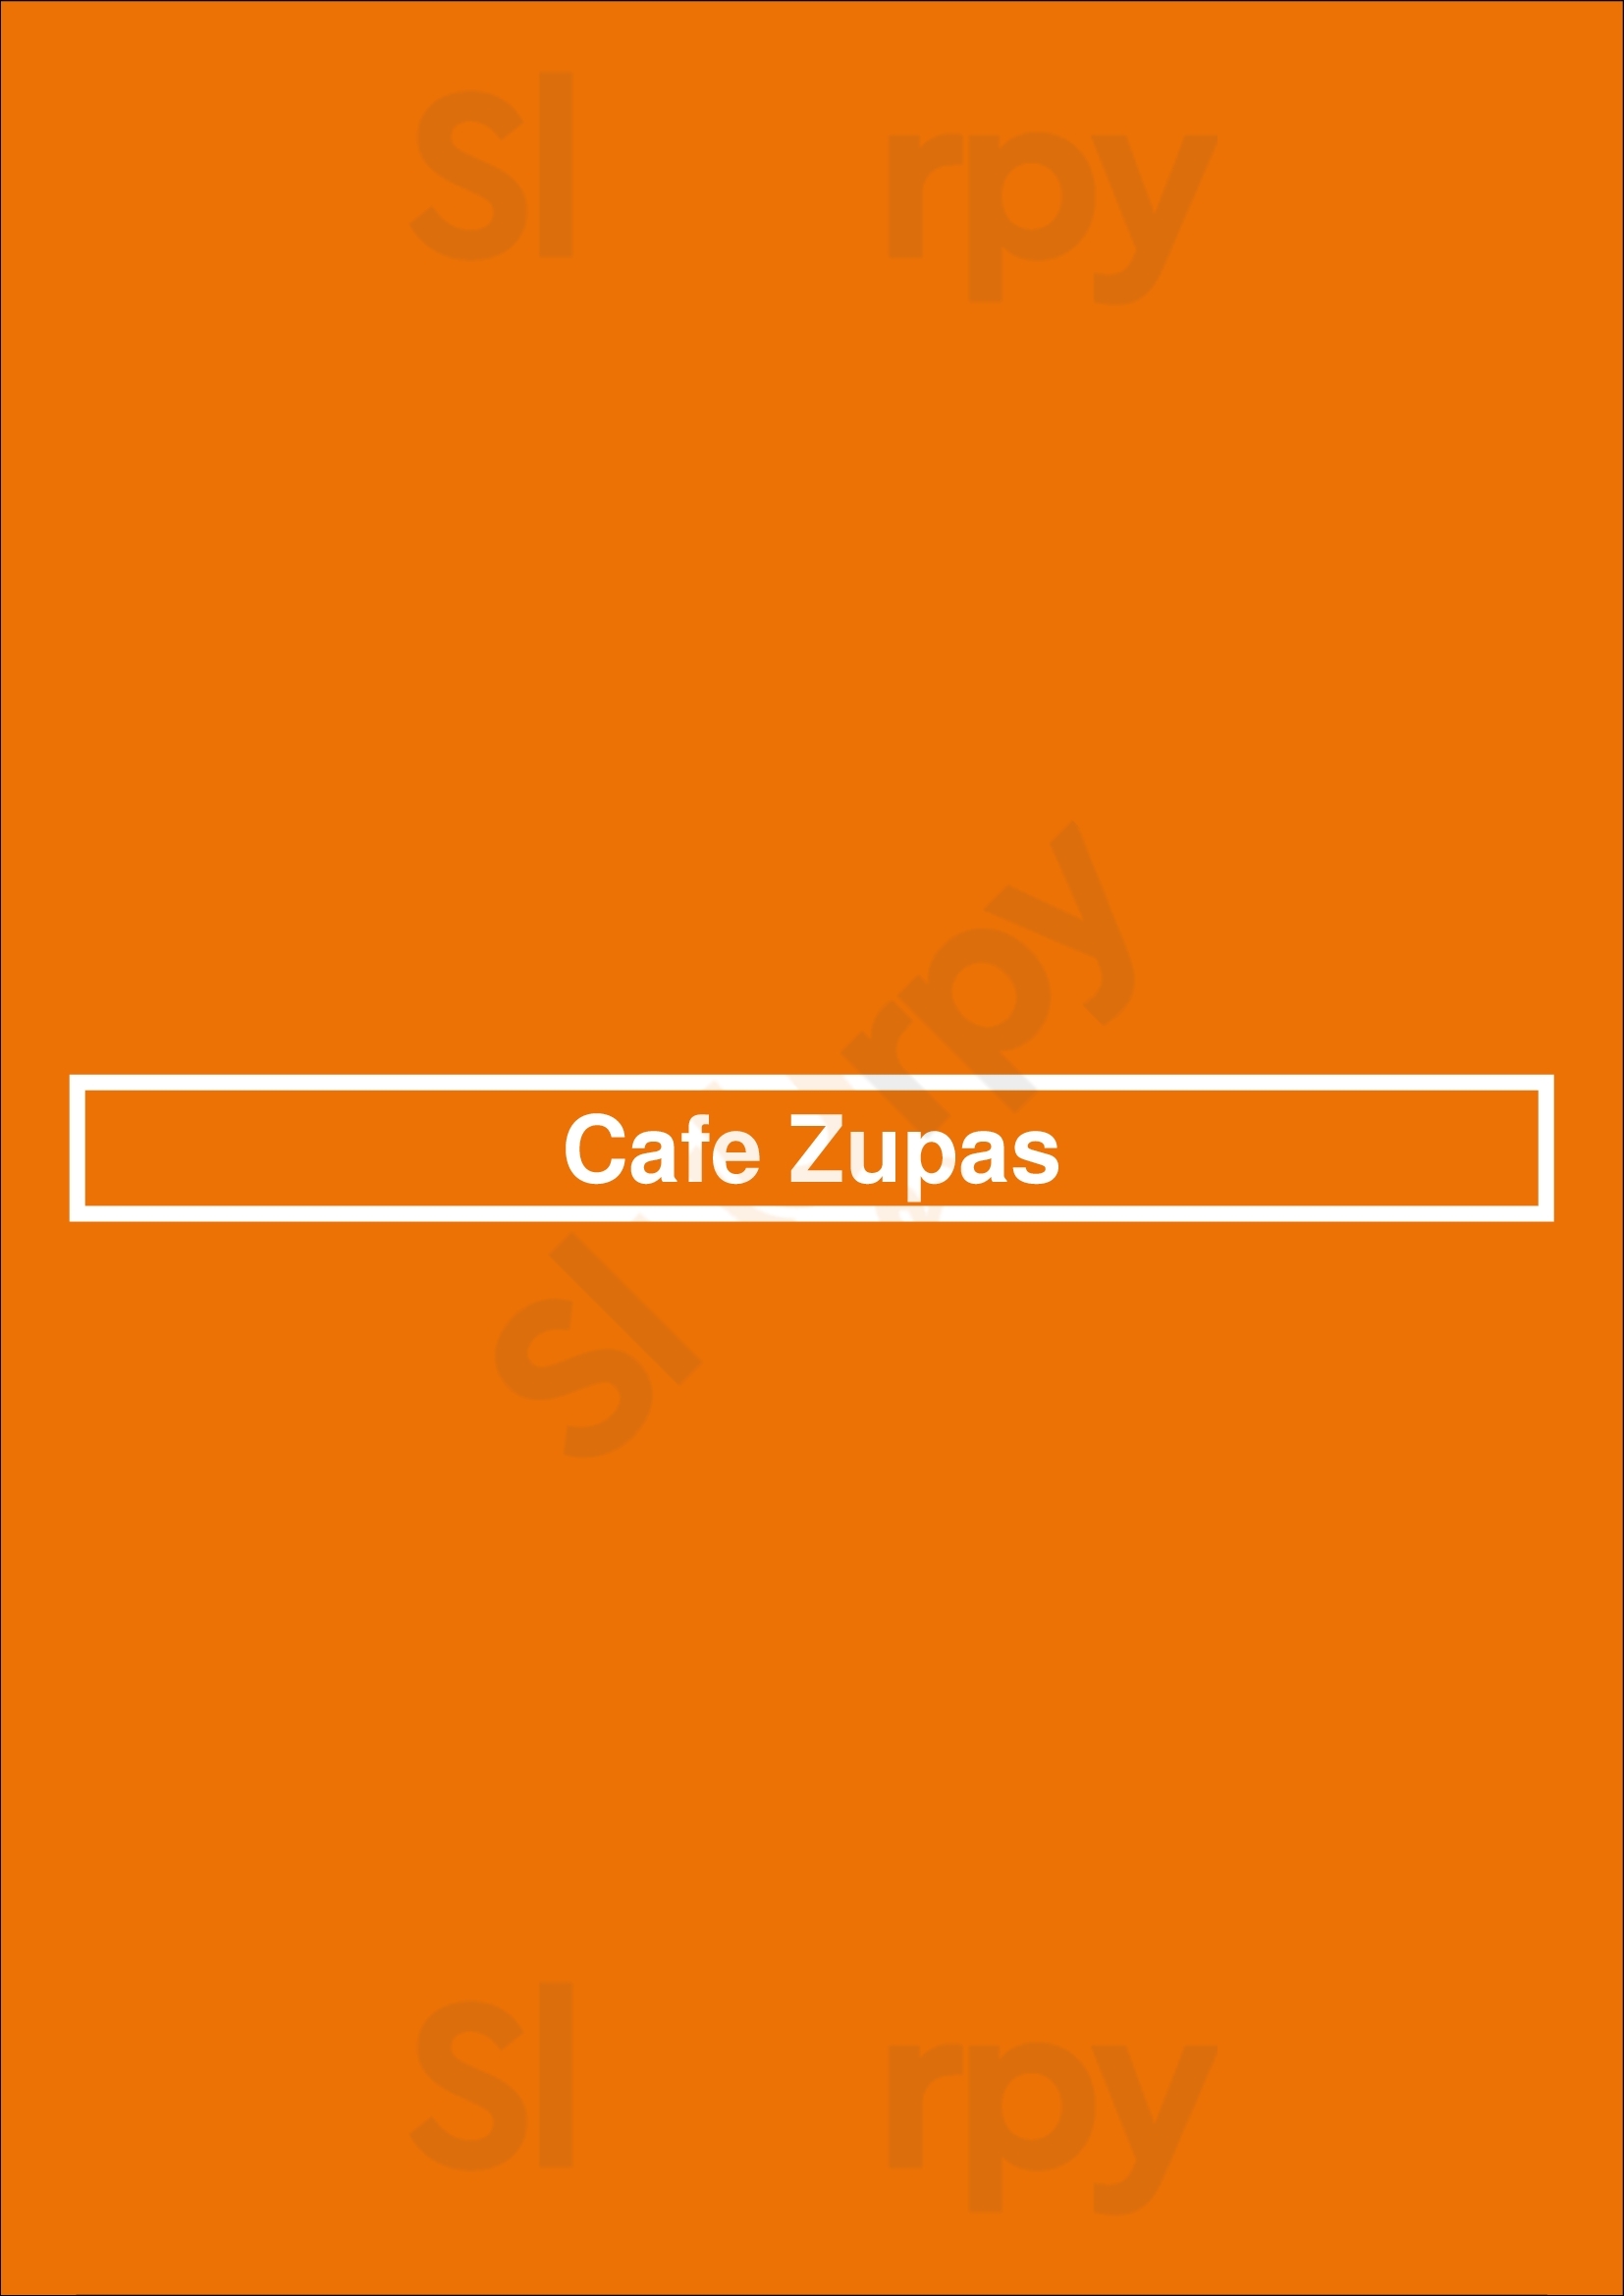 Cafe Zupas Salt Lake City Menu - 1